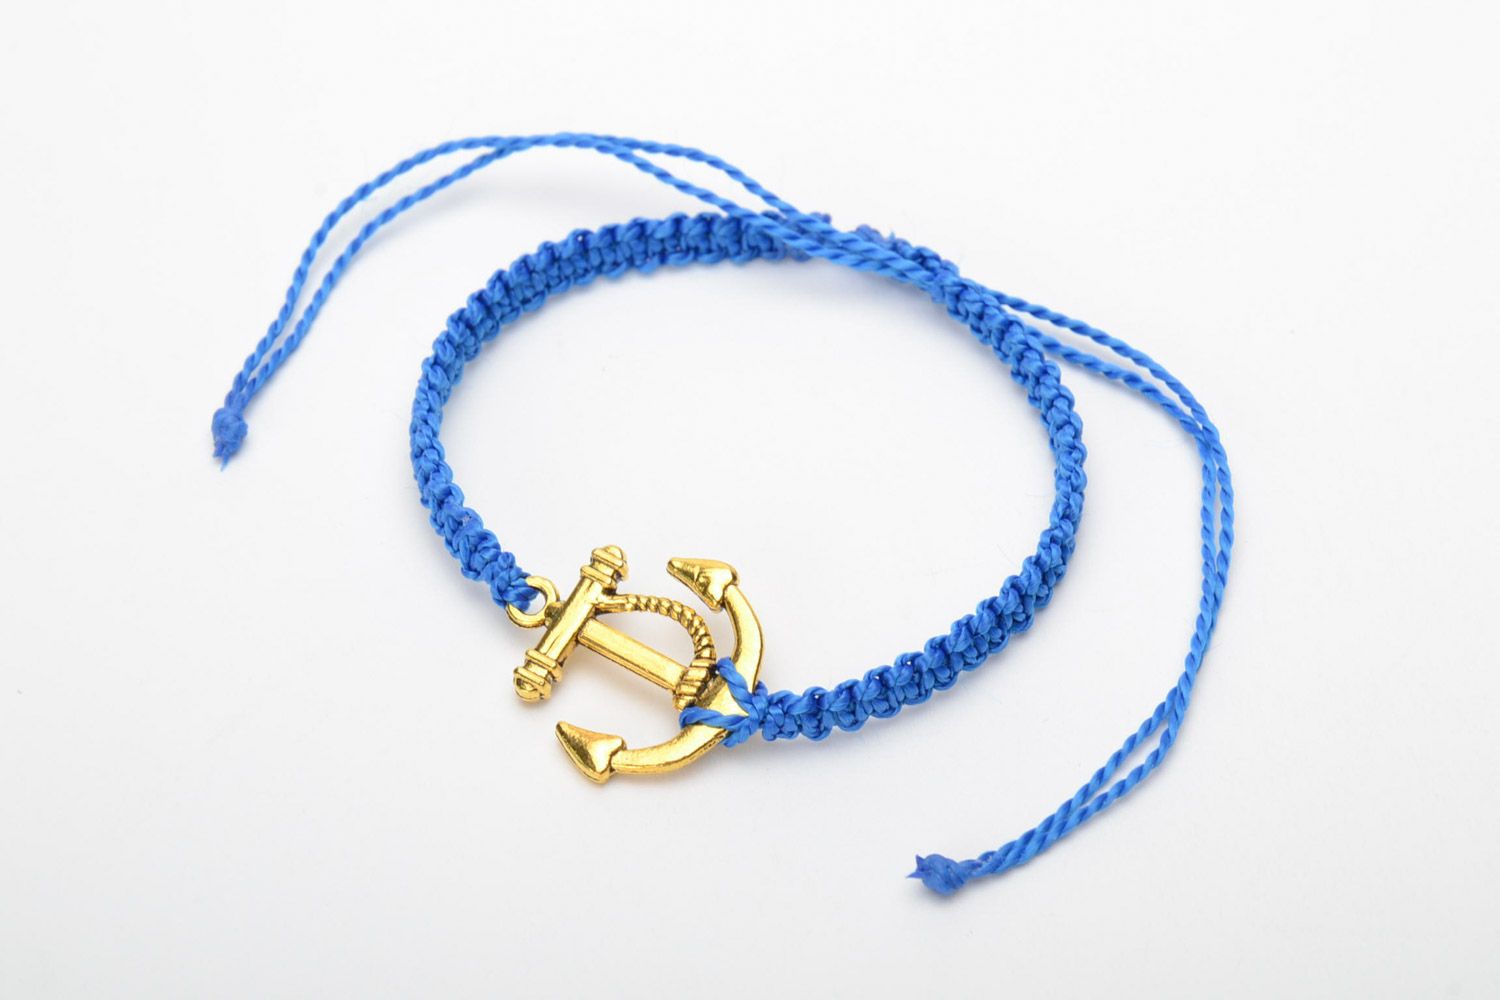 Handmade blue macrame woven cord bracelet with anchor charm photo 3